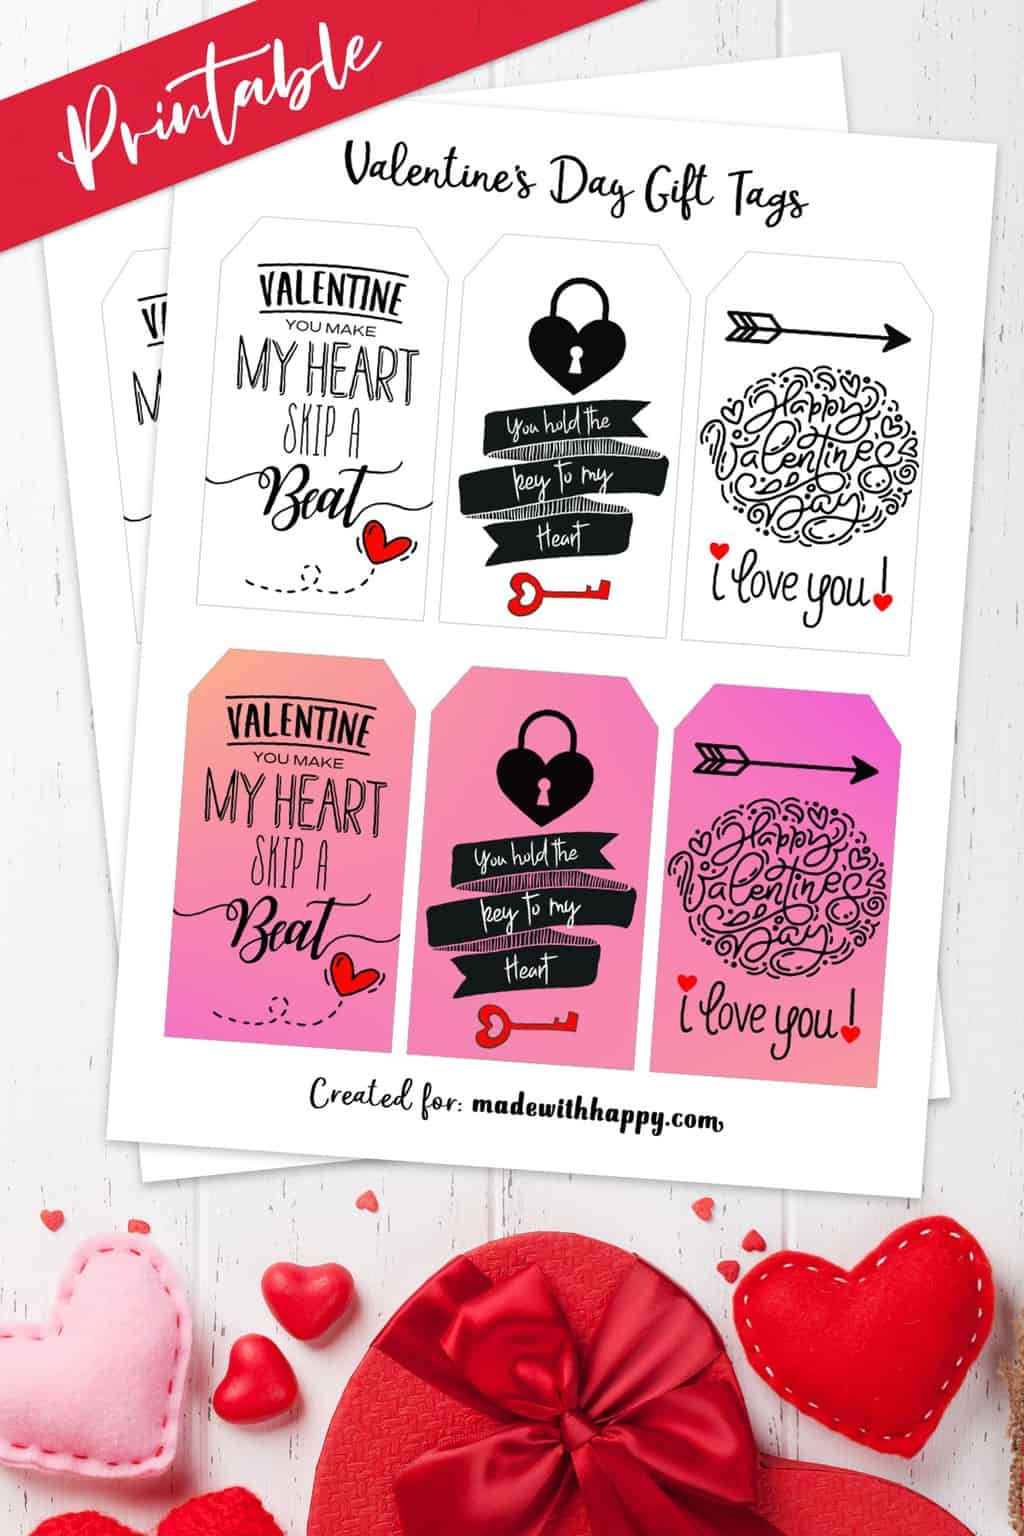 Free Printable Valentines Tags